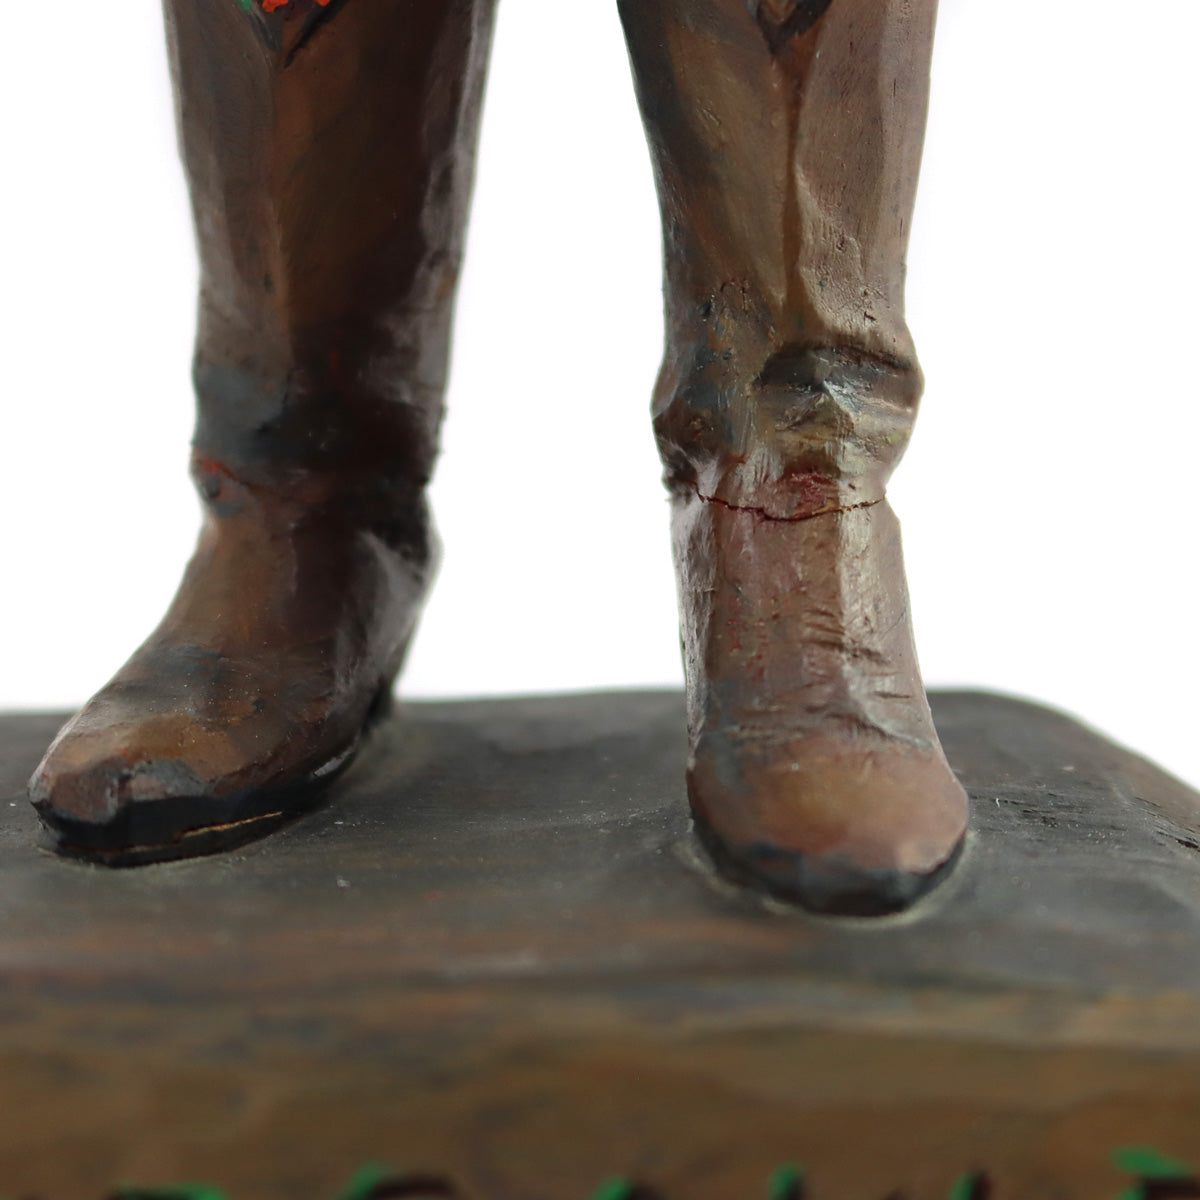 Pair of Wooden Figures: (1.) Dee Flagg (1922-1999) - Annie Oakley / (2.) Unknown Artist - Figure of Standing Man c. 1950s (M1924)